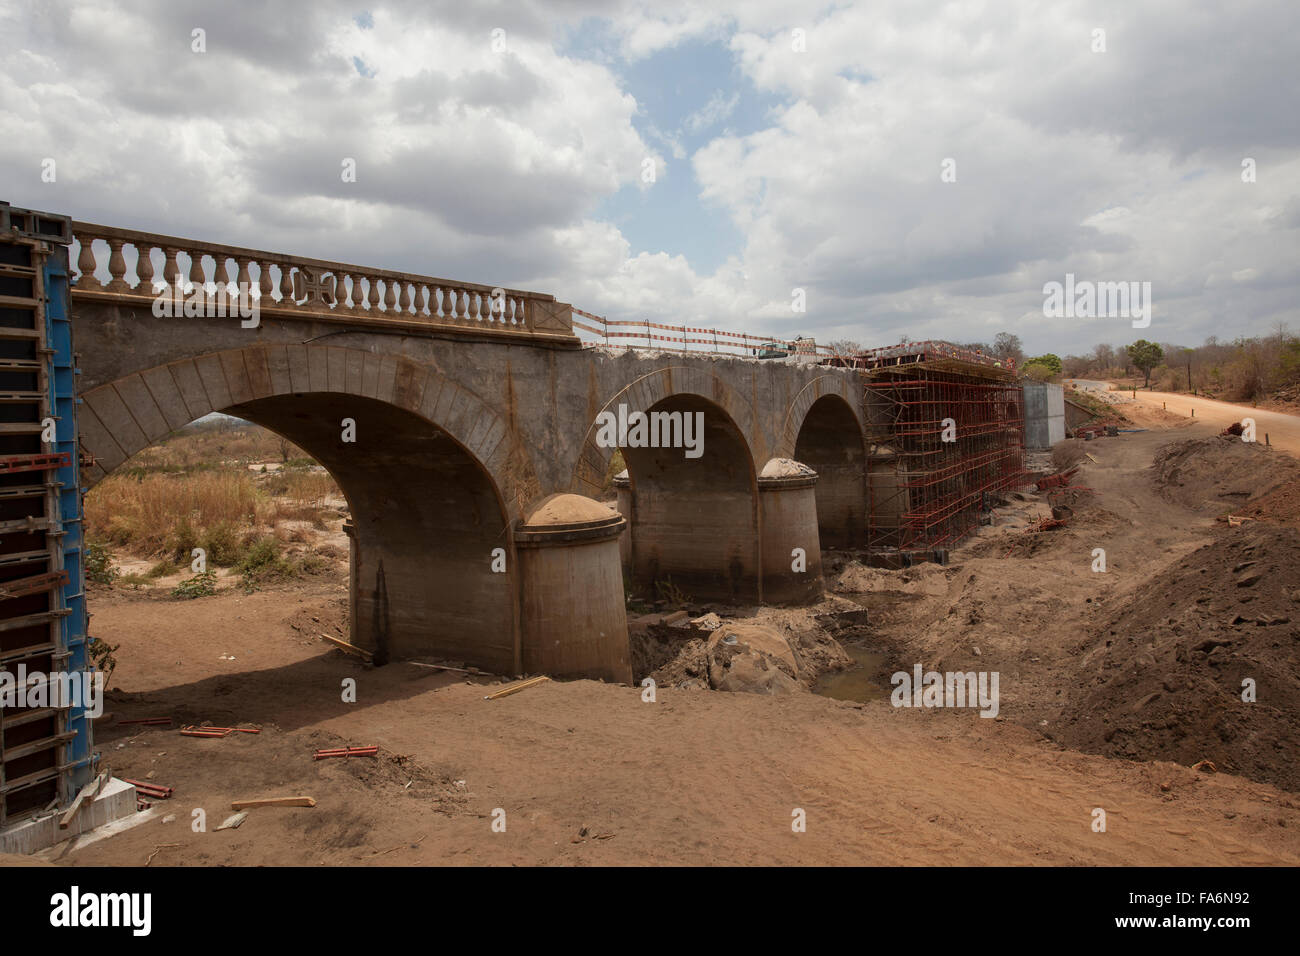 Bauarbeiter sanieren eine alternde Brücke entlang der Namialo Rio Lurio Road im Norden Mosambiks, SE Afrika. Stockfoto